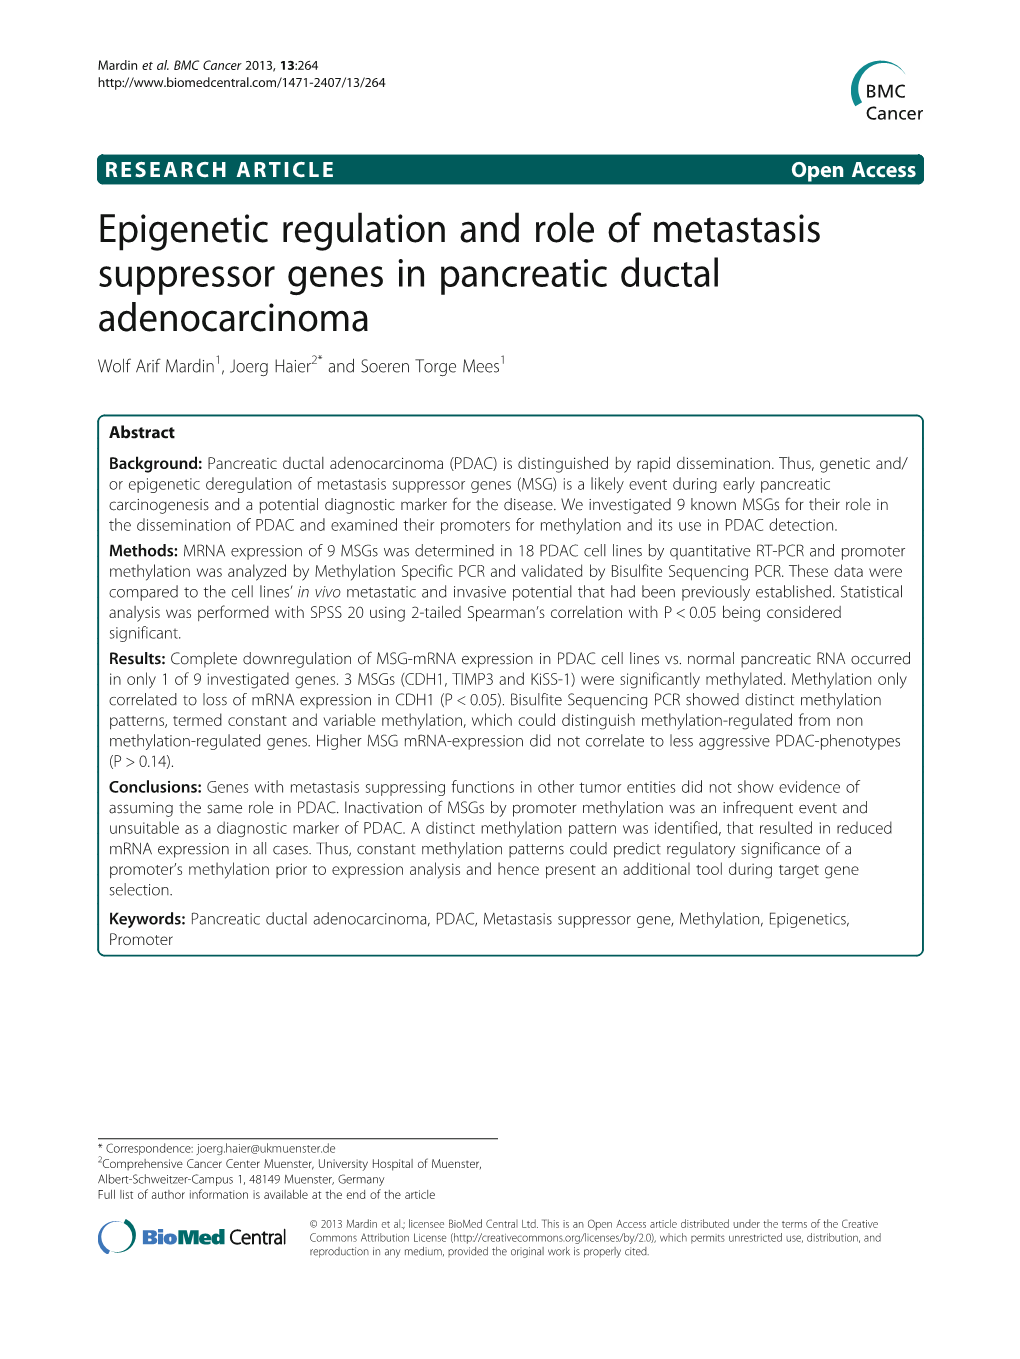 Epigenetic Regulation and Role of Metastasis Suppressor Genes in Pancreatic Ductal Adenocarcinoma Wolf Arif Mardin1, Joerg Haier2* and Soeren Torge Mees1